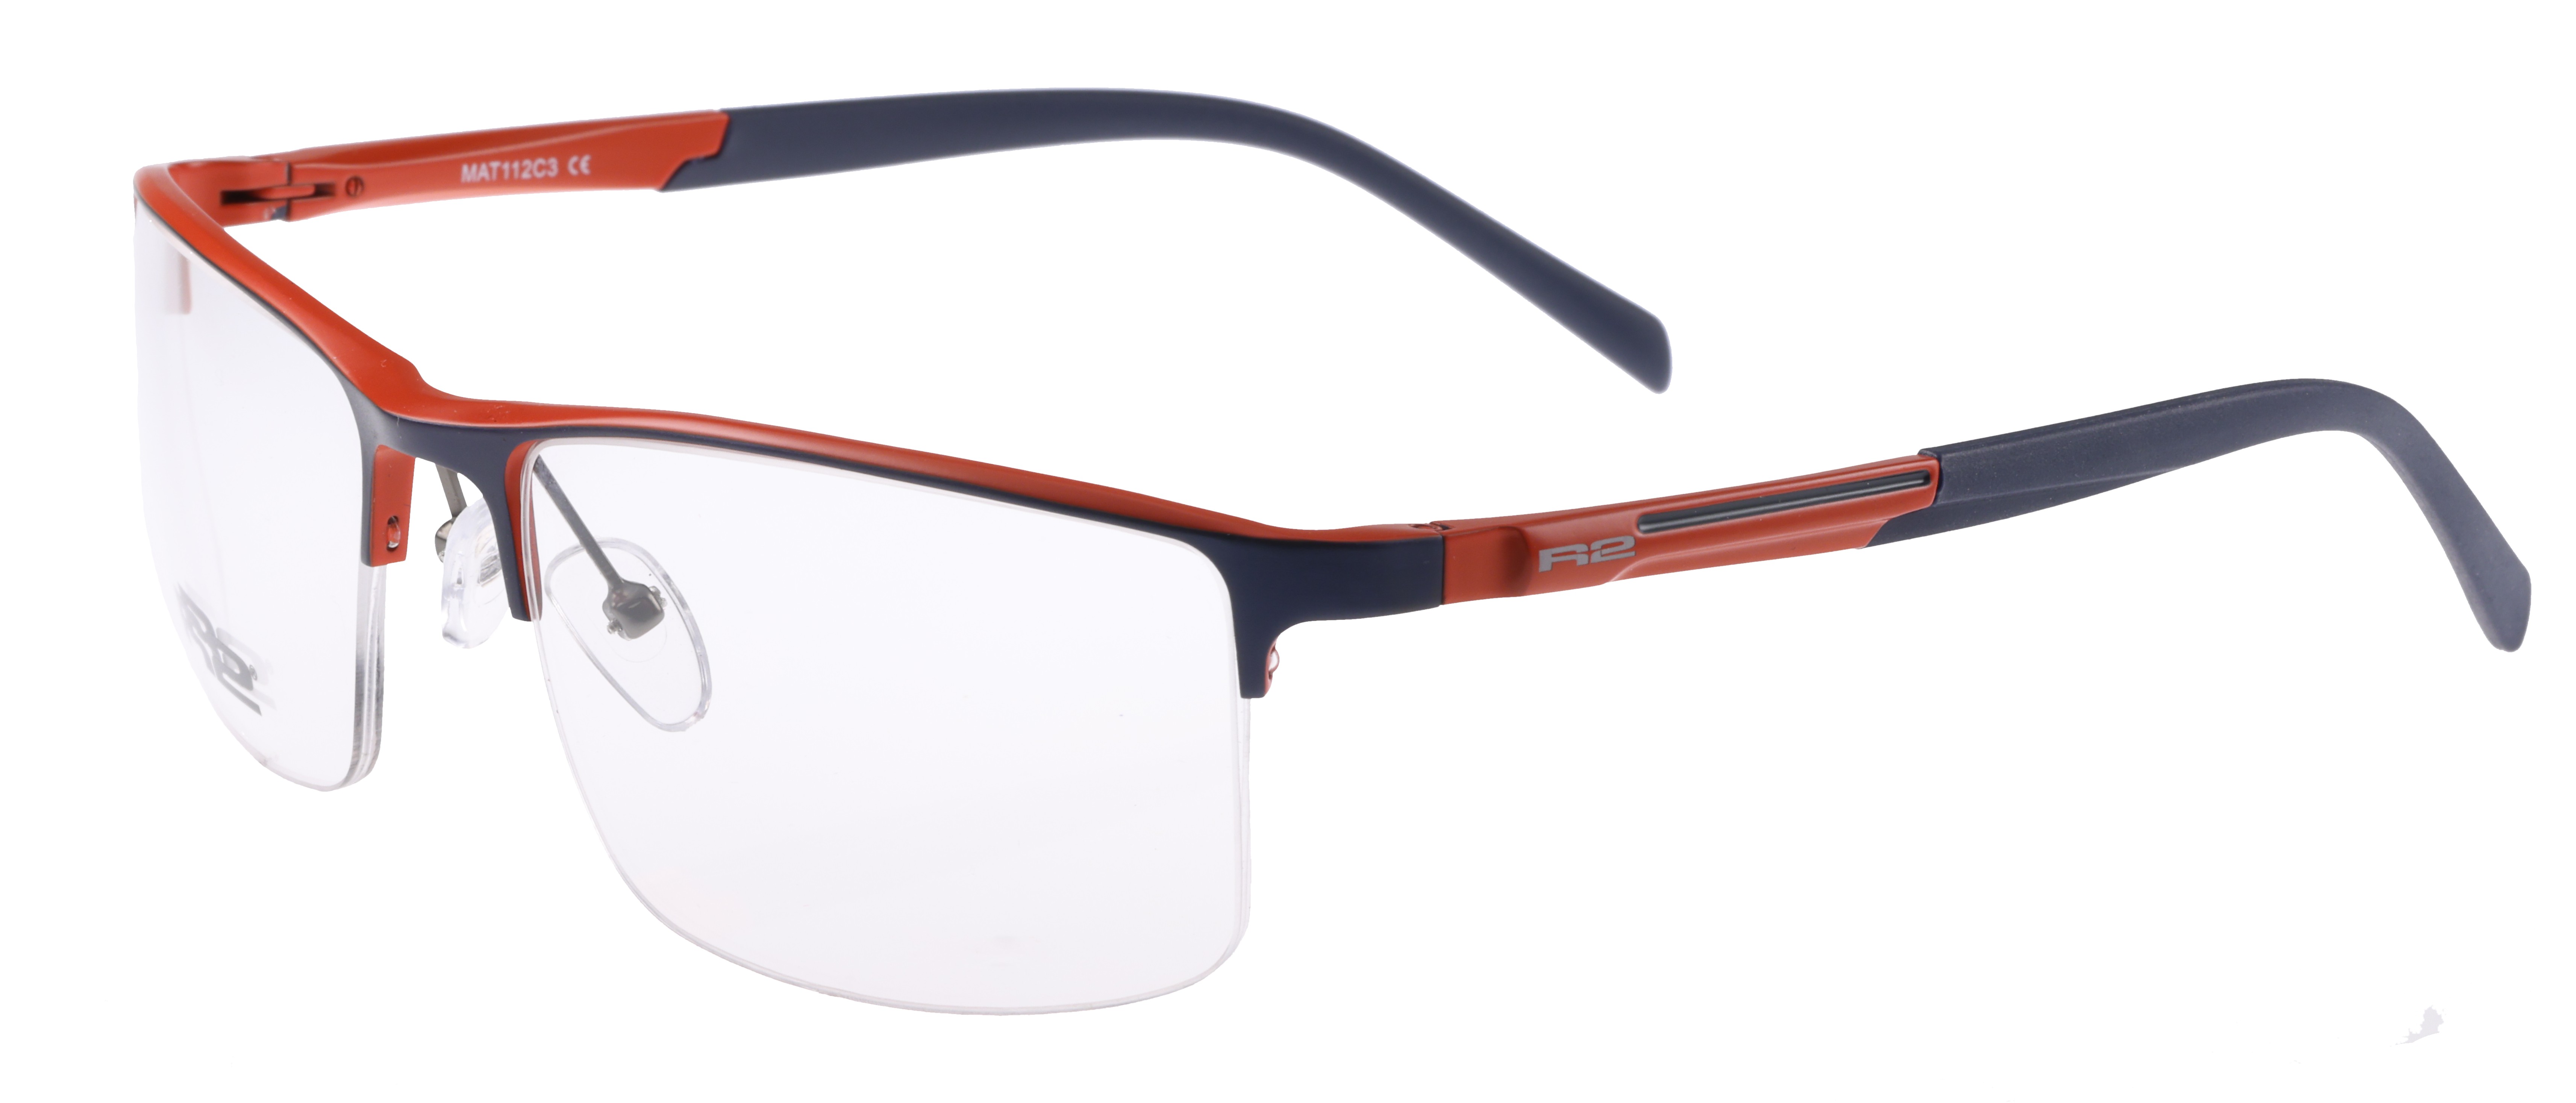 Sportovní dioptrické brýle R2  ORTIS MAT112C3 - XL